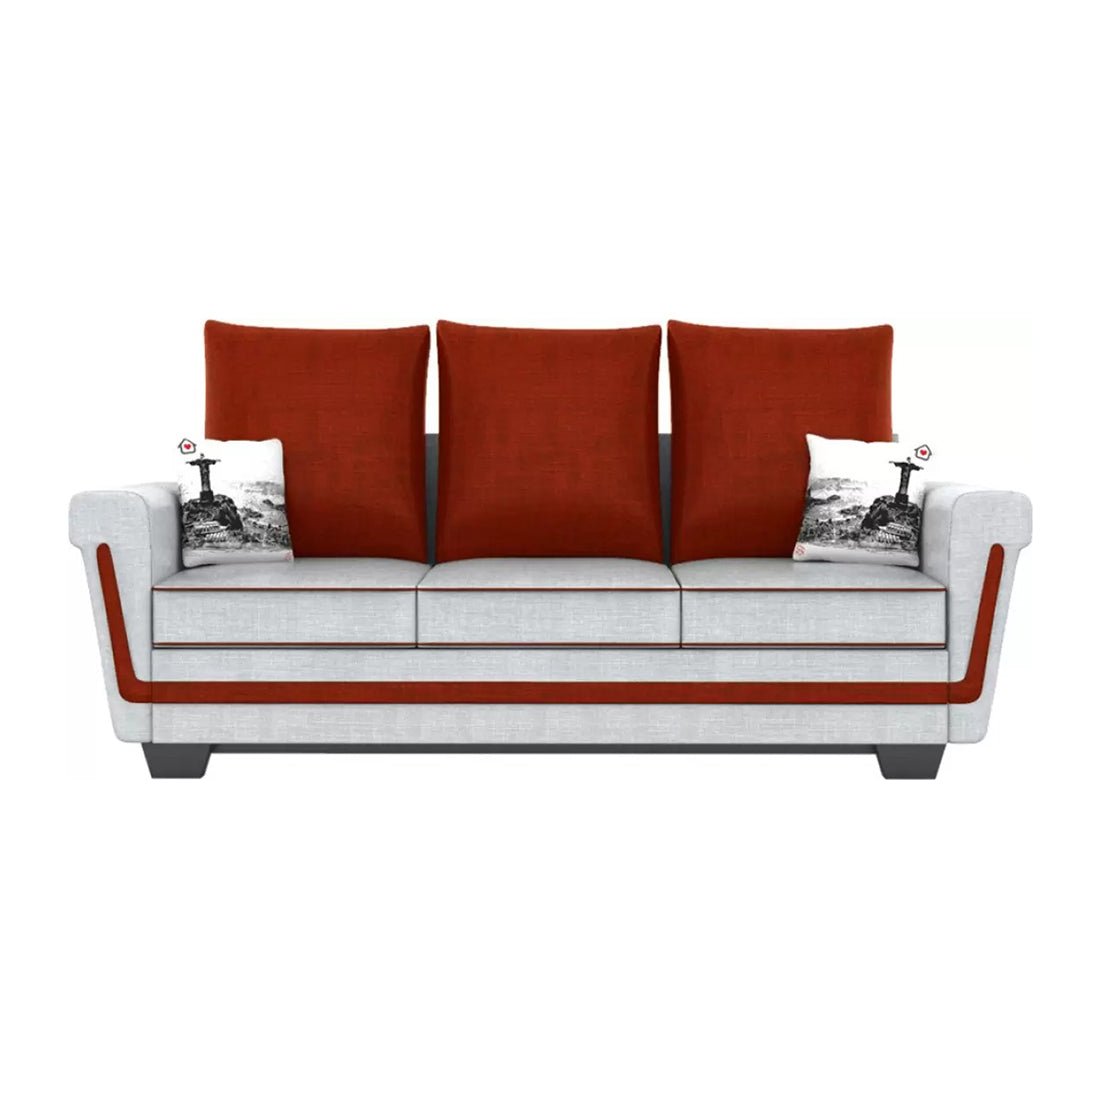 Torque India Winterton 3 Seater Fabric Sofa | Furniture for Living Room And Office - TorqueIndia